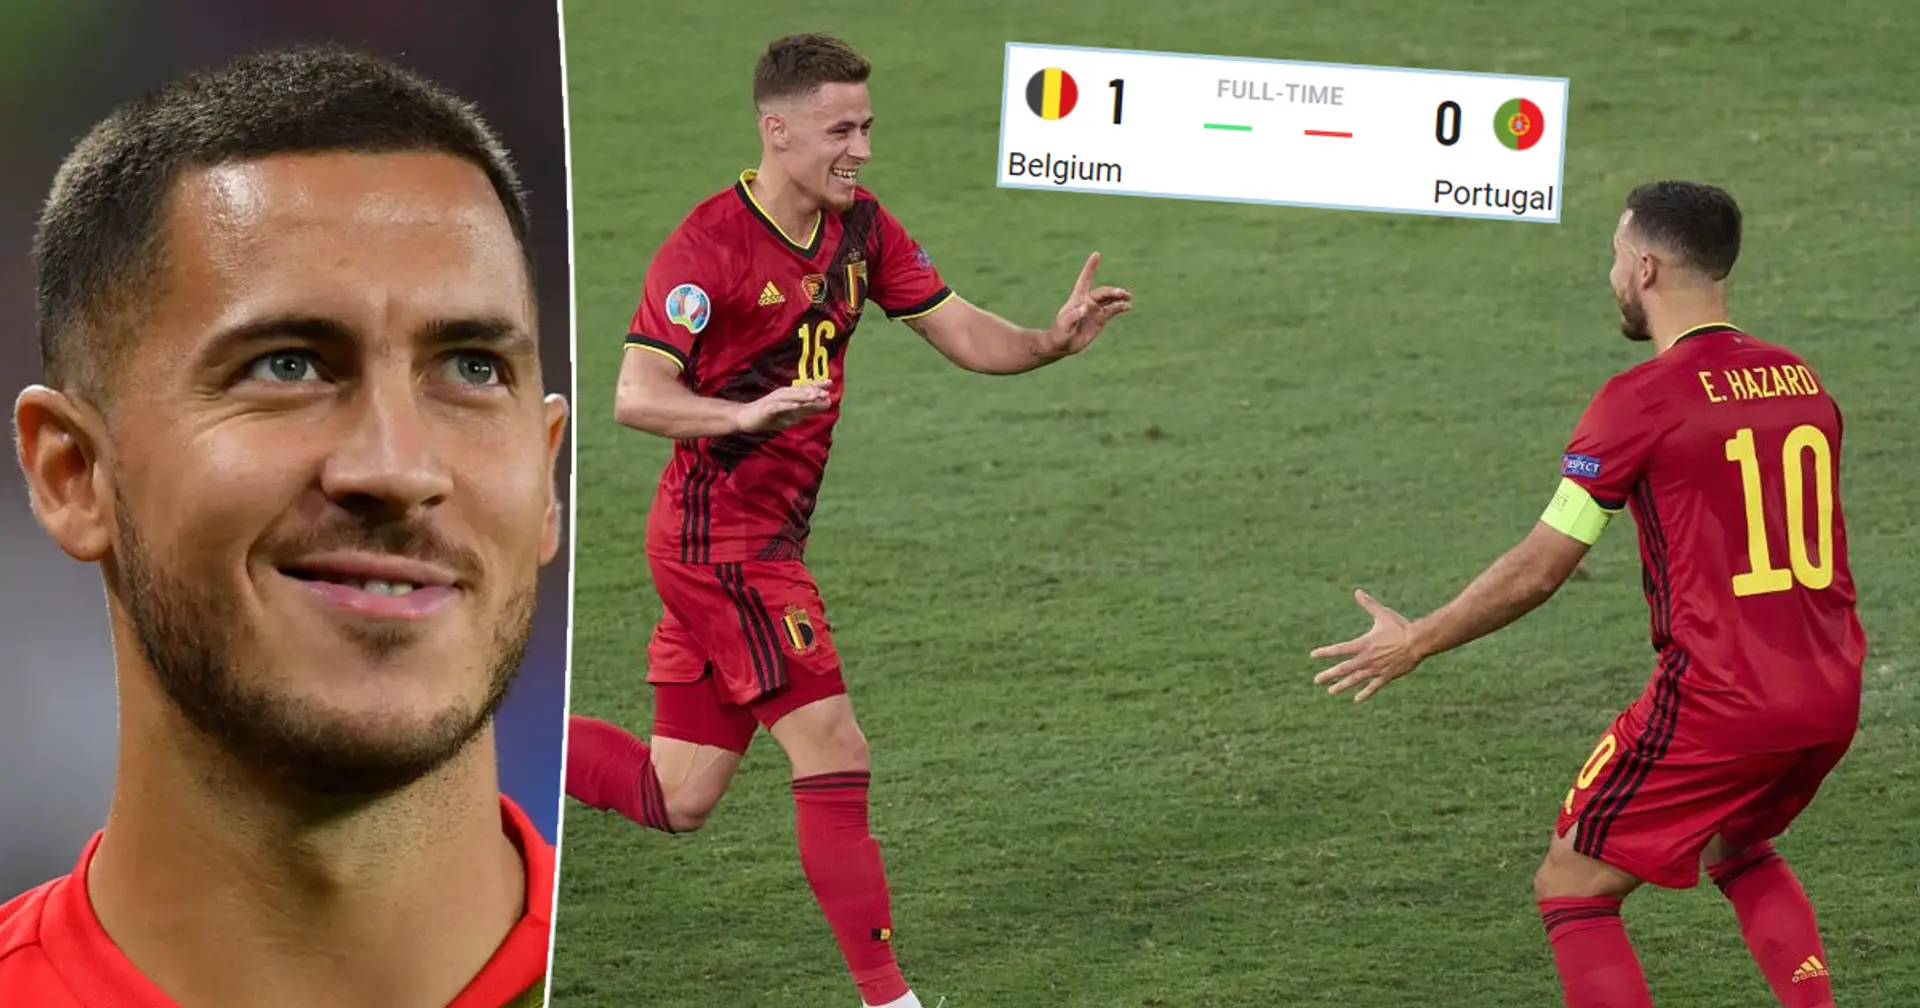 Thorgan Hazard says Eden deserves MOTM award in Portugal game — 7 stats to back up his claim